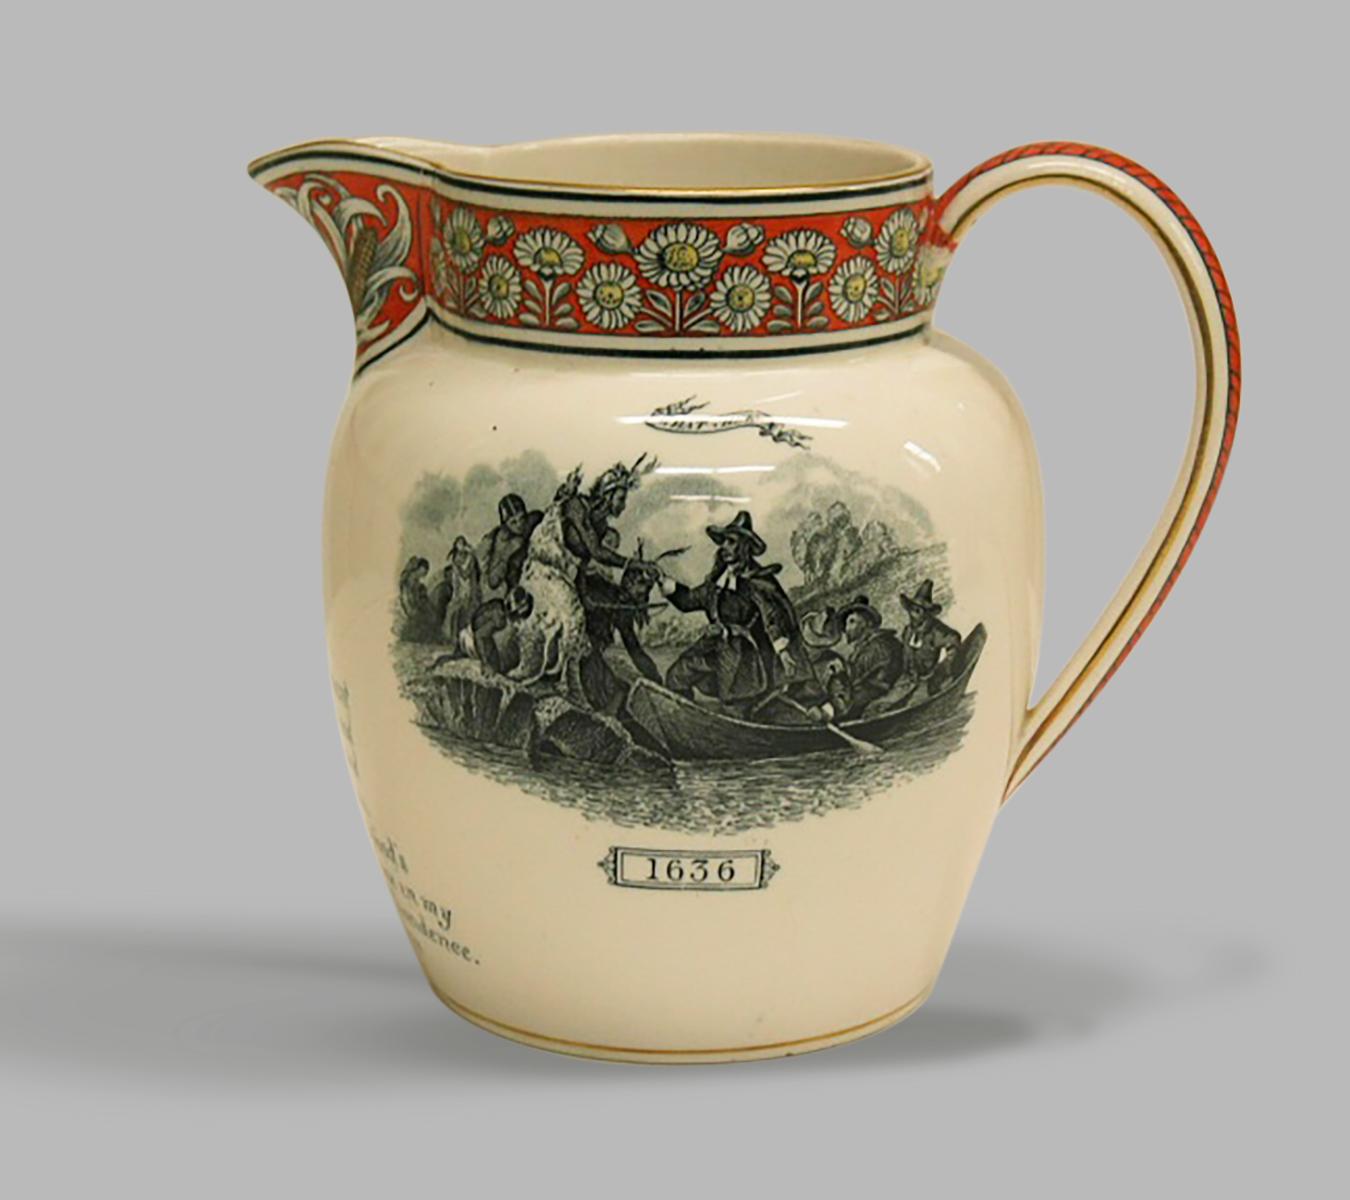 transferware jug depicting Roger Williams in a boat encountering Narragansett people